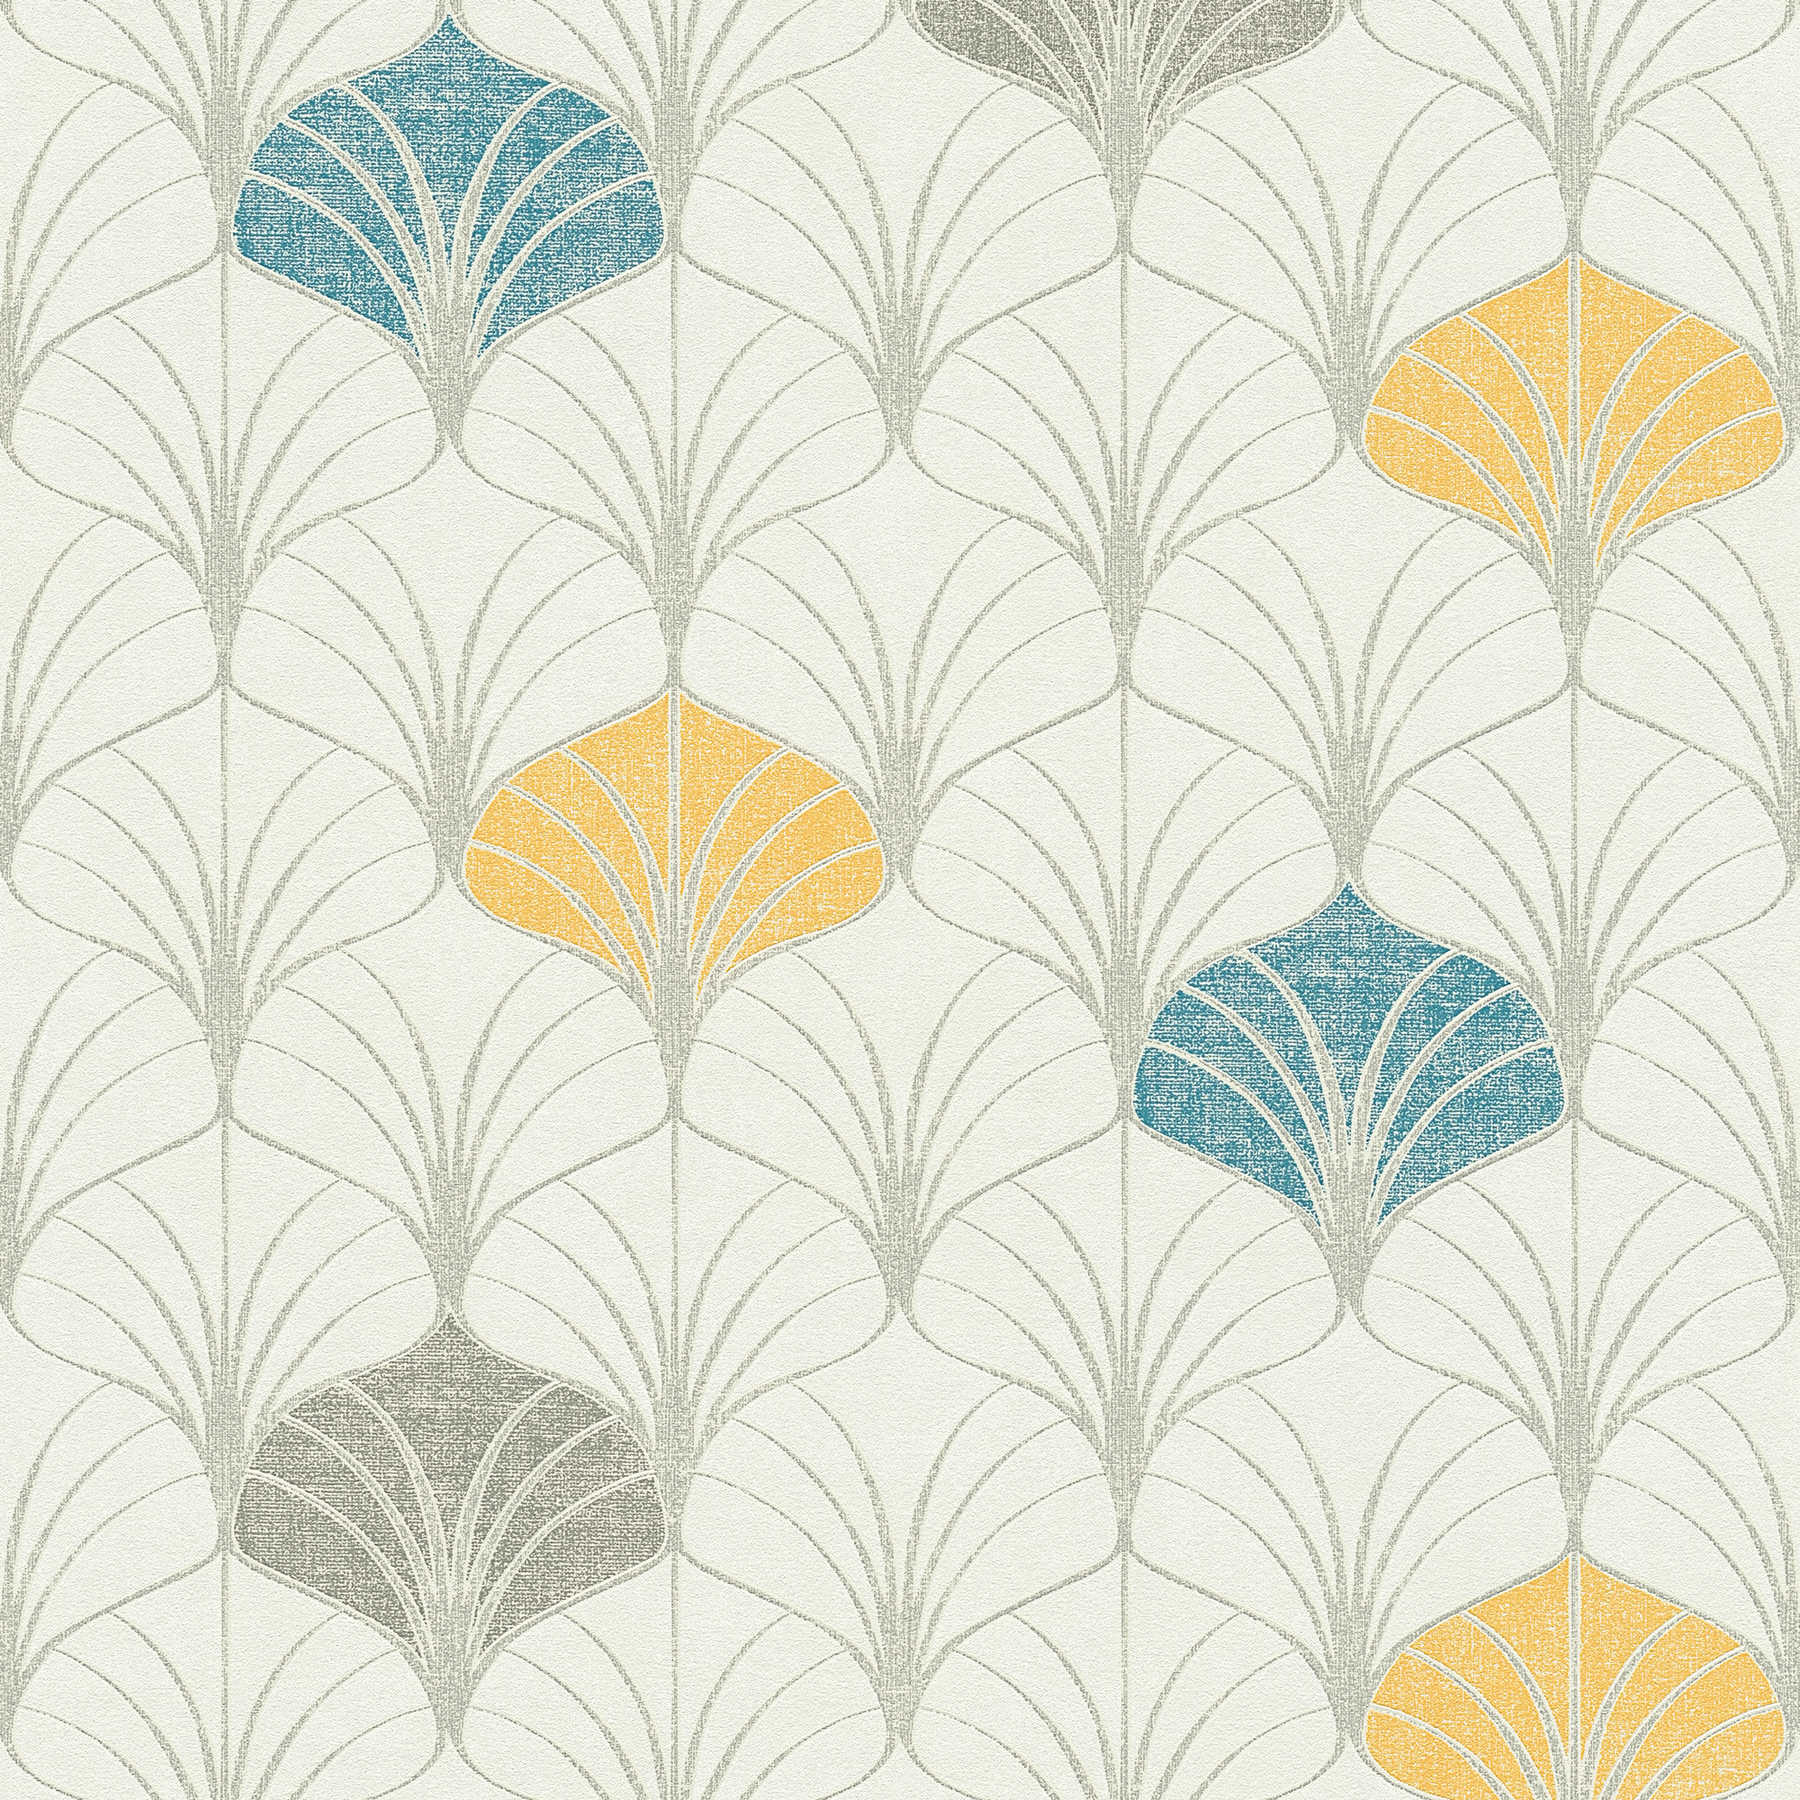         Pattern wallpaper art deco style with metallic effect - grey, blue, yellow
    